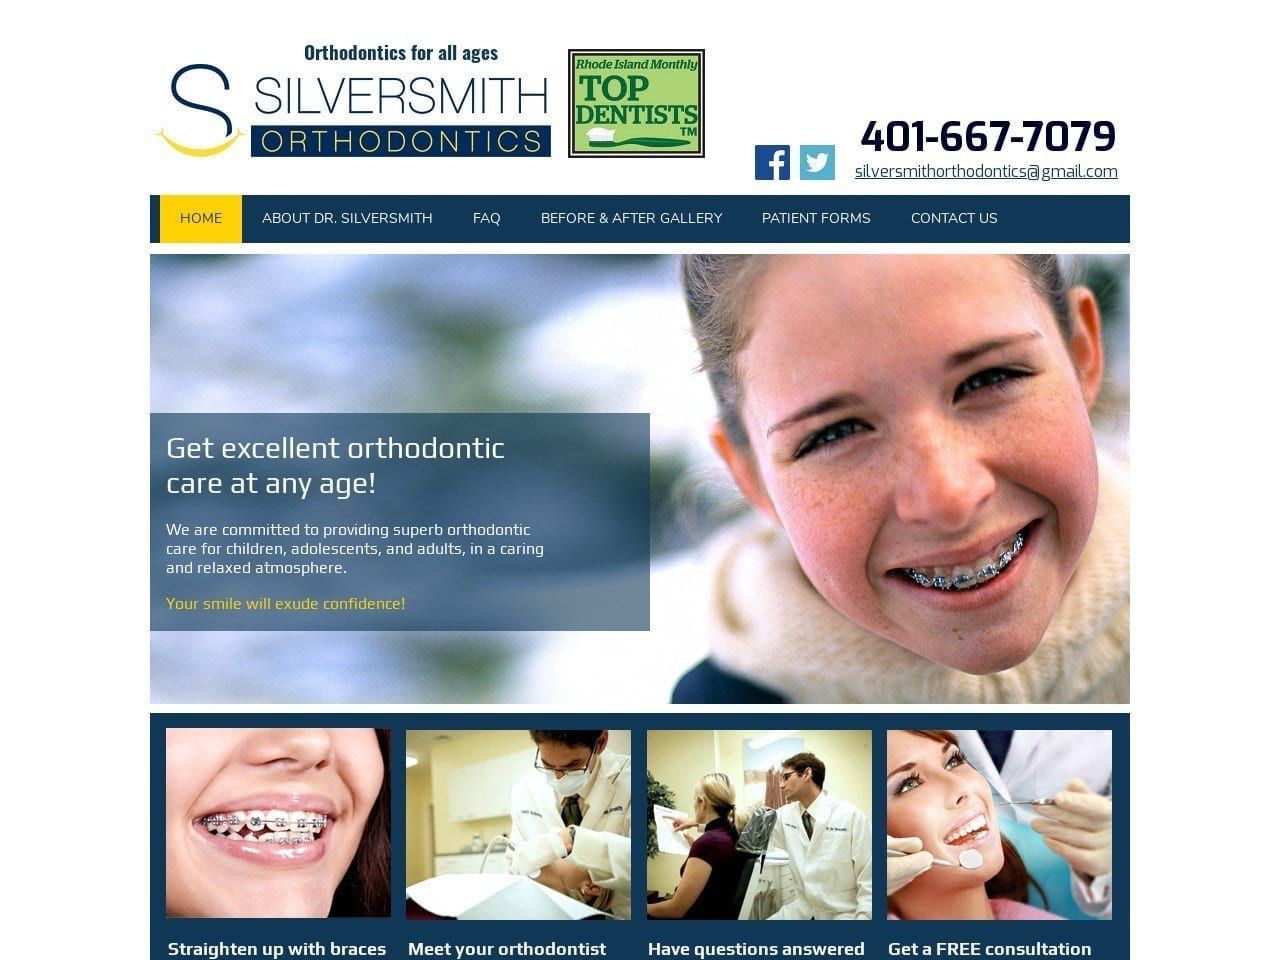 Dr. Ian S. Silversmith DDS Website Screenshot from silversmithorthodontics.com